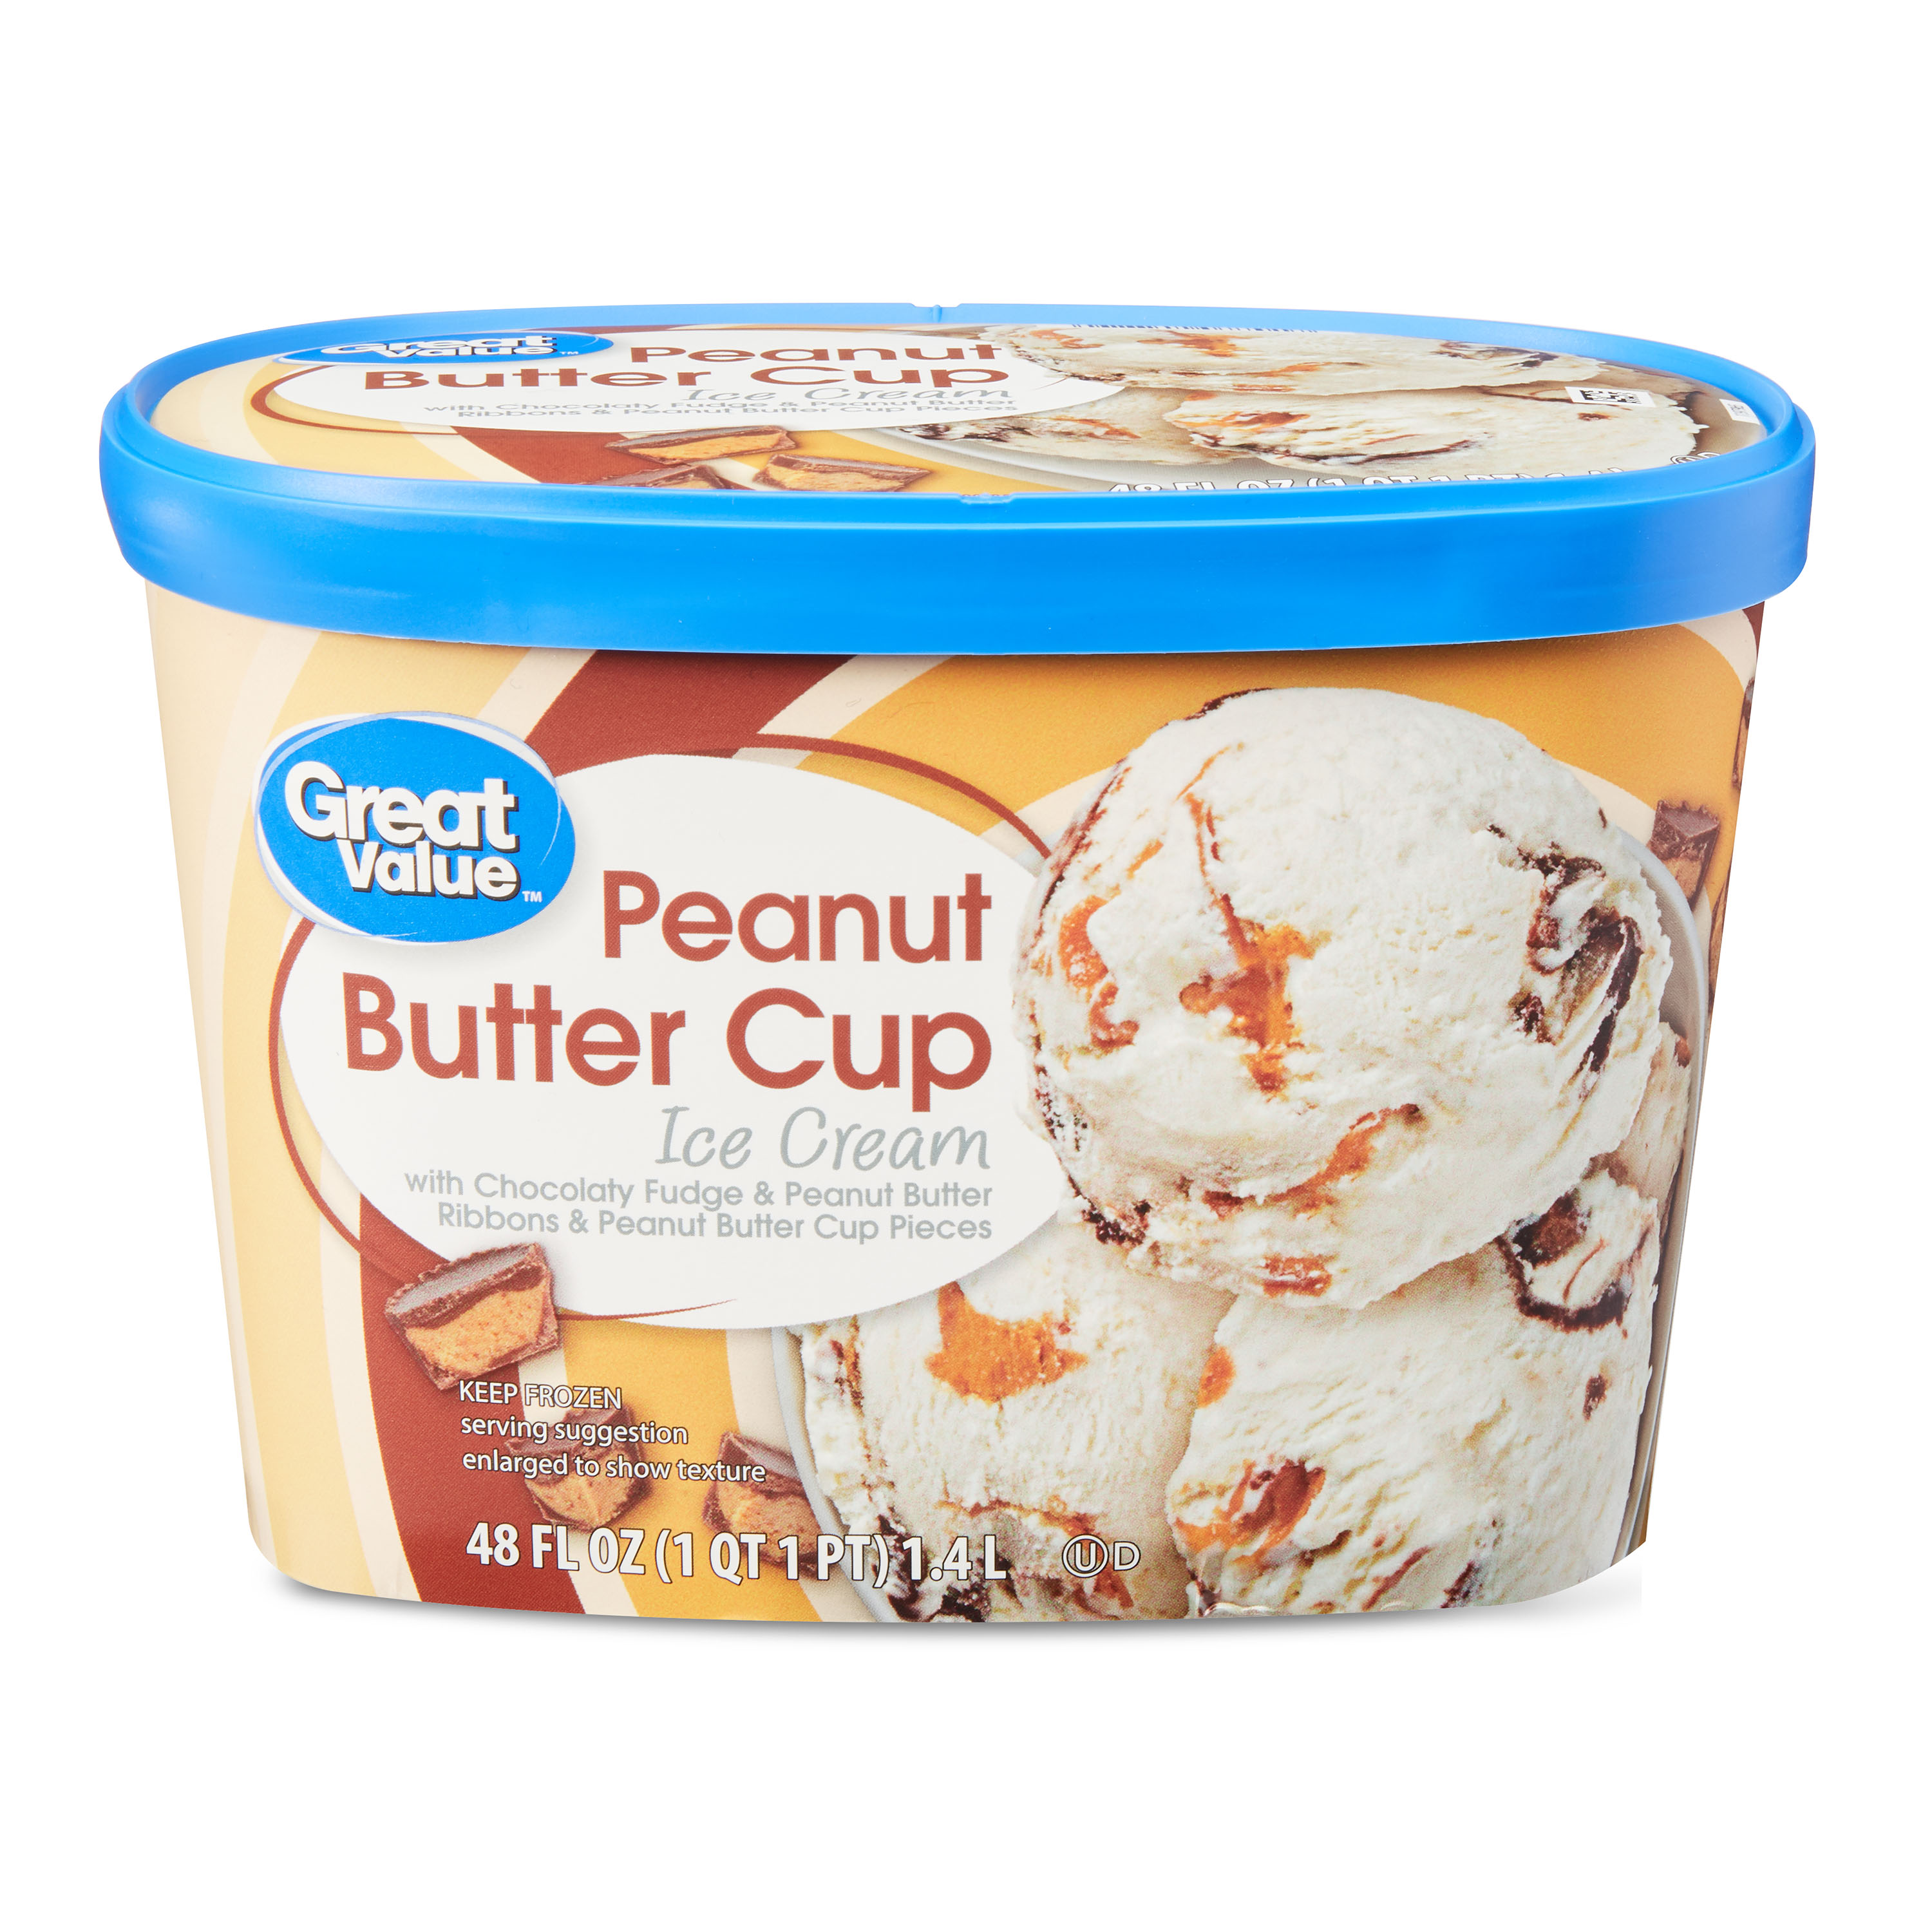 Great Value Peanut Butter Cup Ice Cream, 48 Fl Oz Image